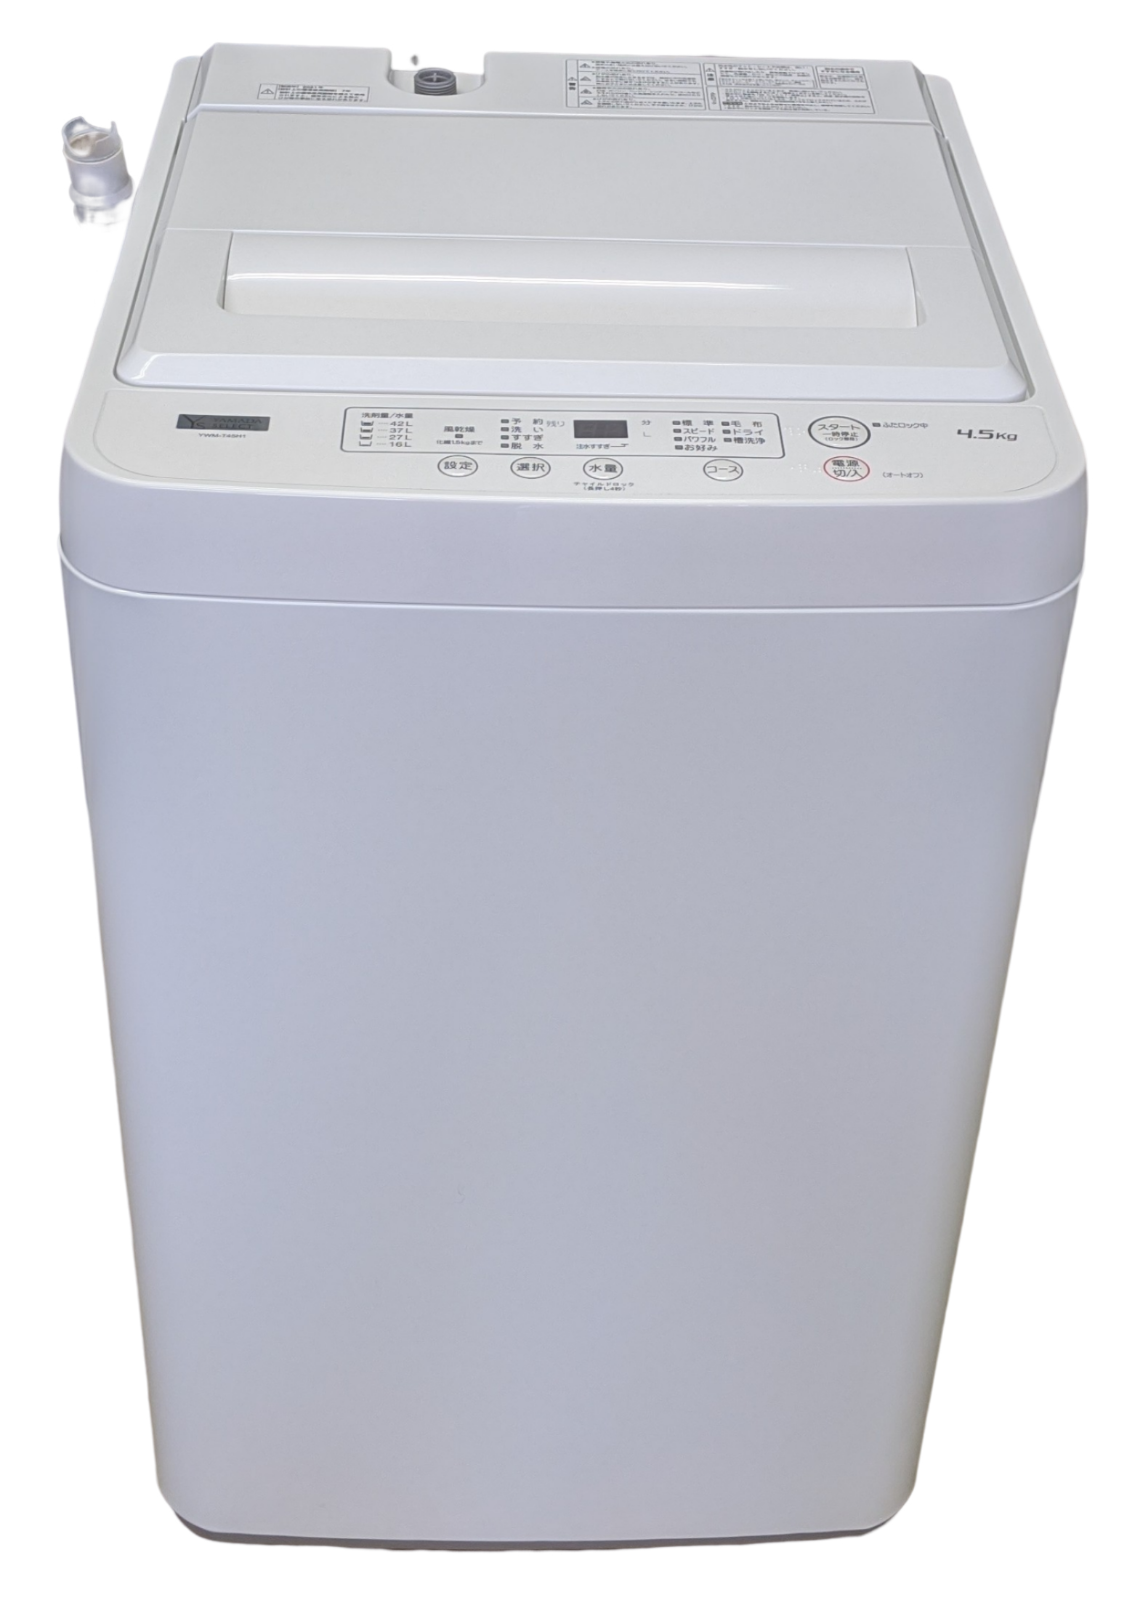 YAMADA SELECT(ヤマダセレクト) 全自動洗濯機 (洗濯5.0kg) アーバン 